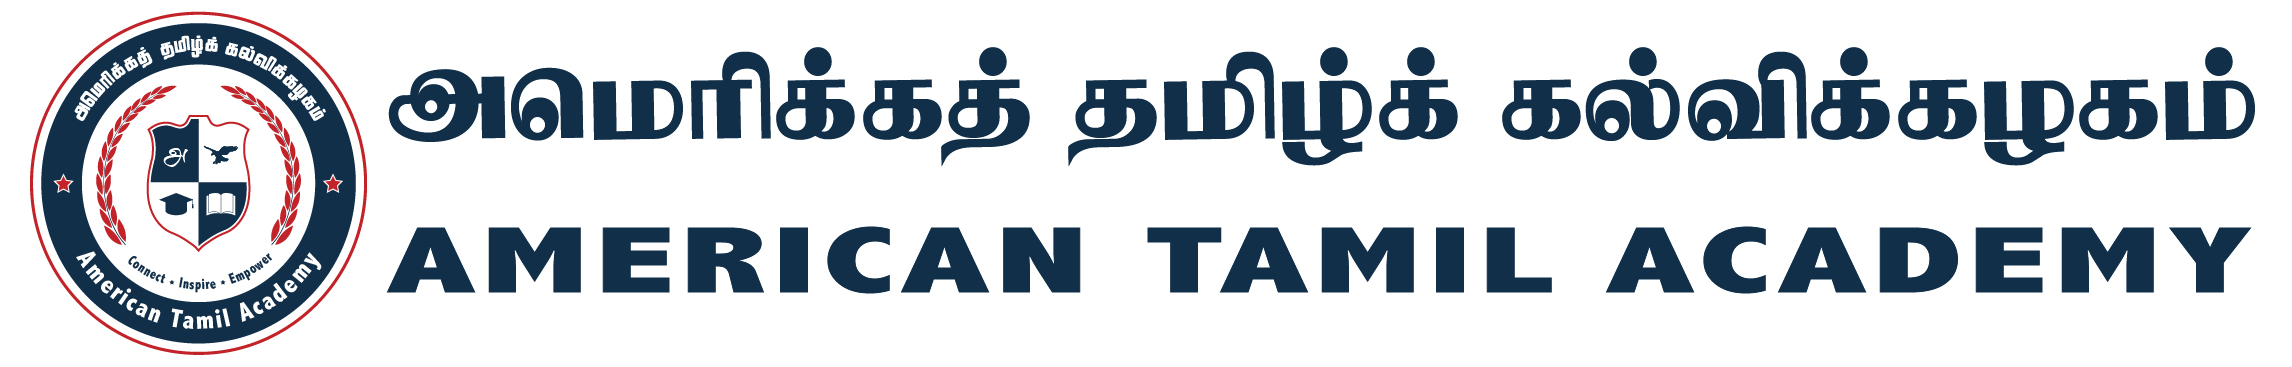 American Tamil Academy Logo